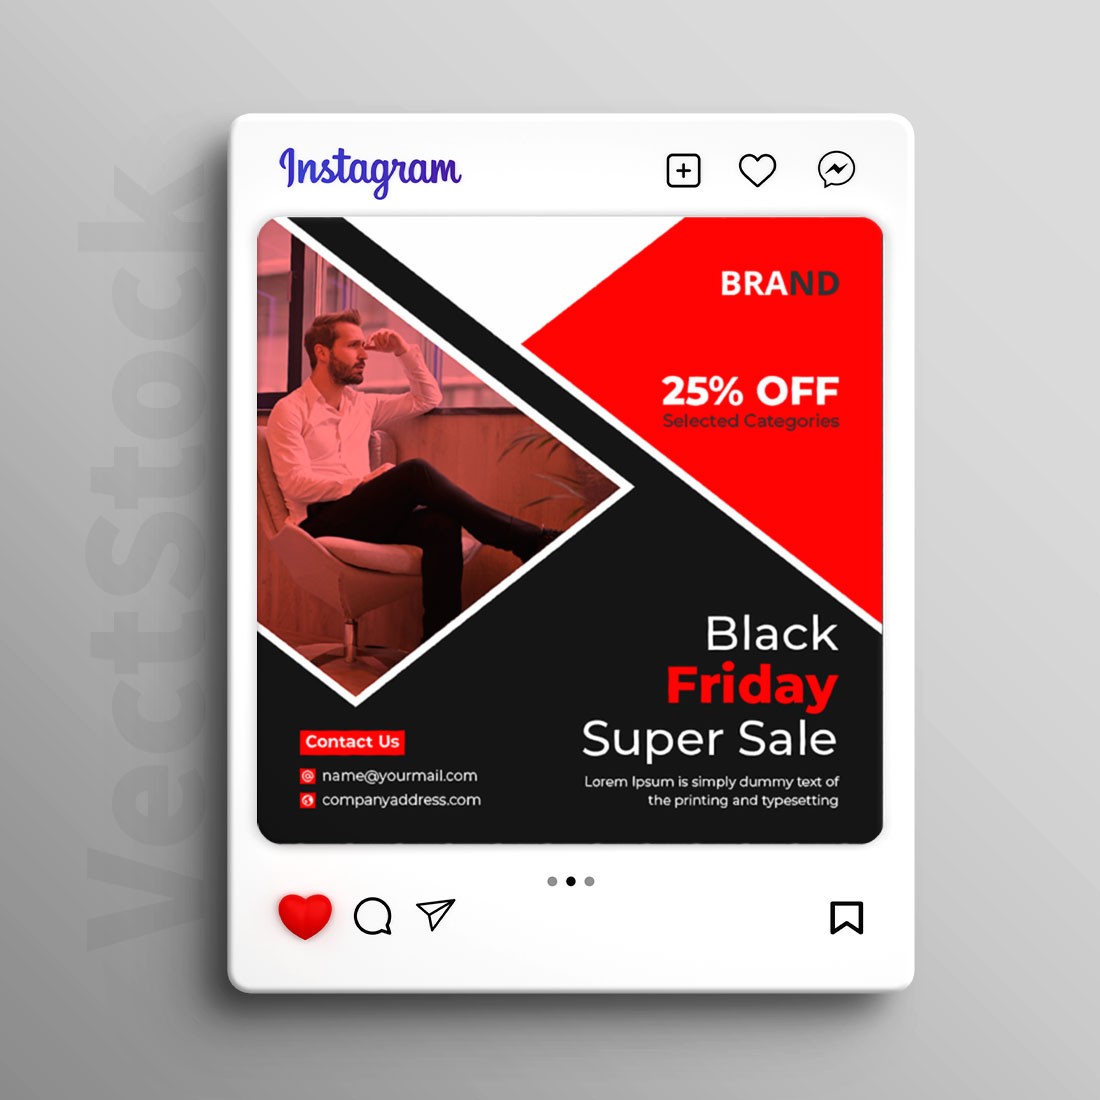 Black Friday sale social media Instagram post and banner template design cover image.